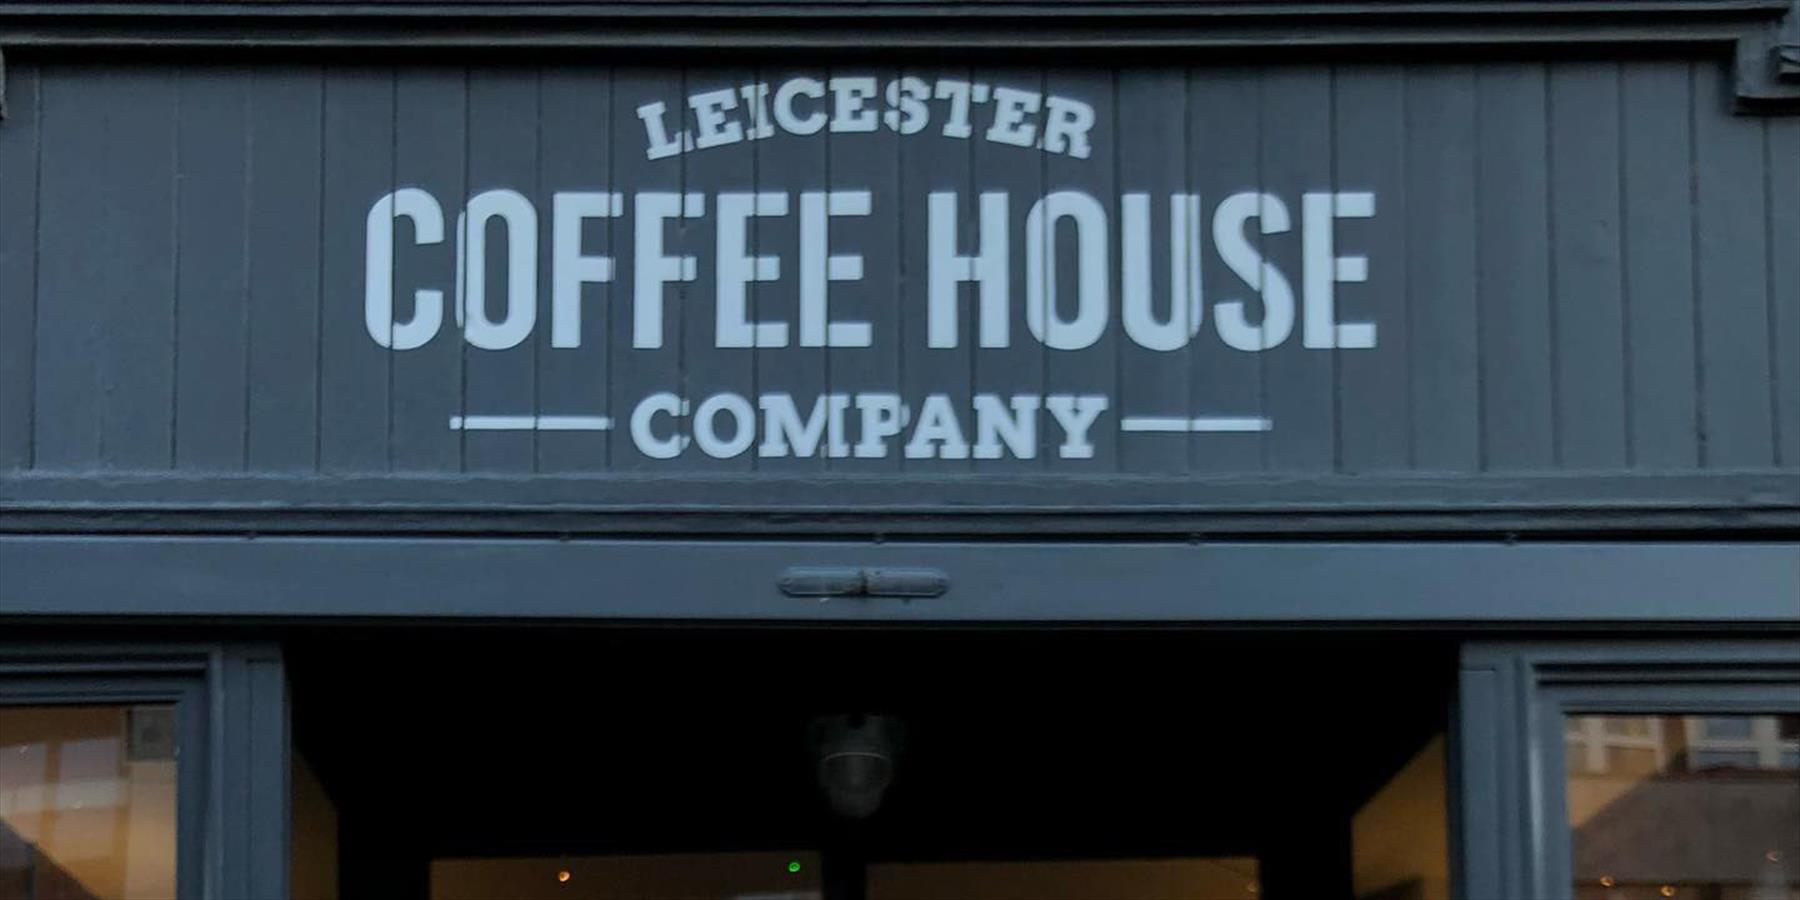 Coffee House sign